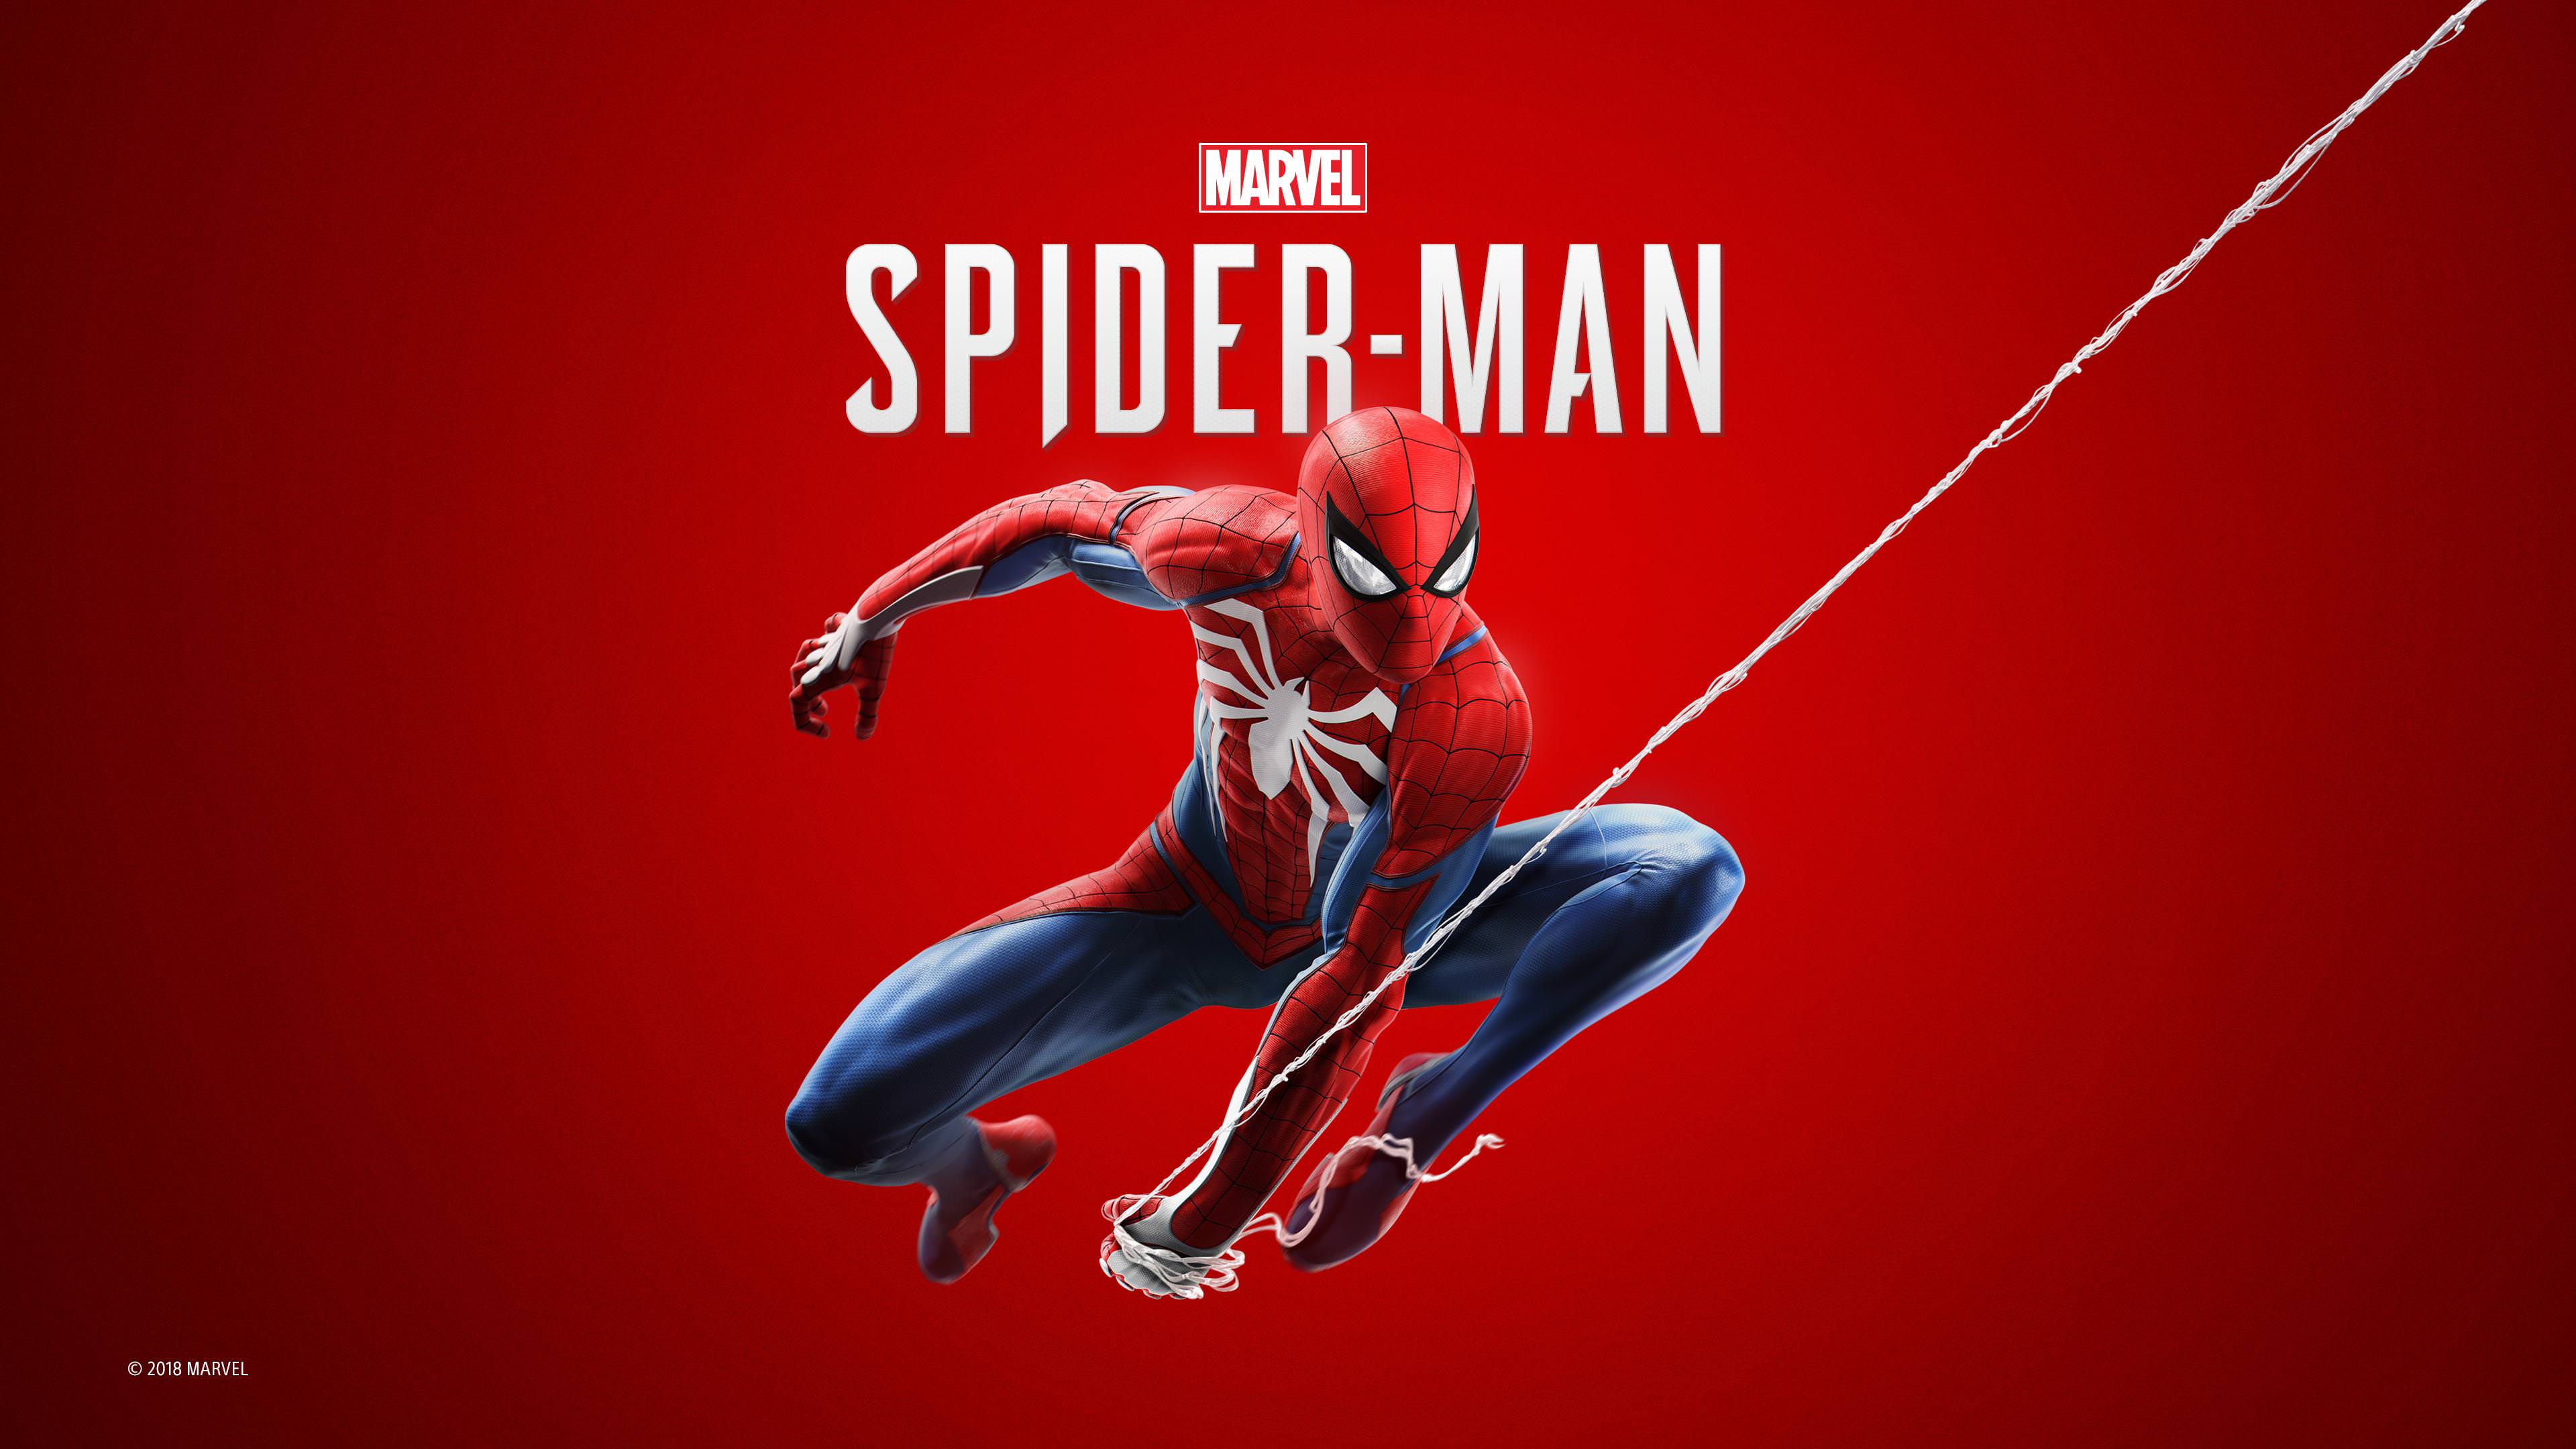 Spiderman Wallpaper 4K Free download